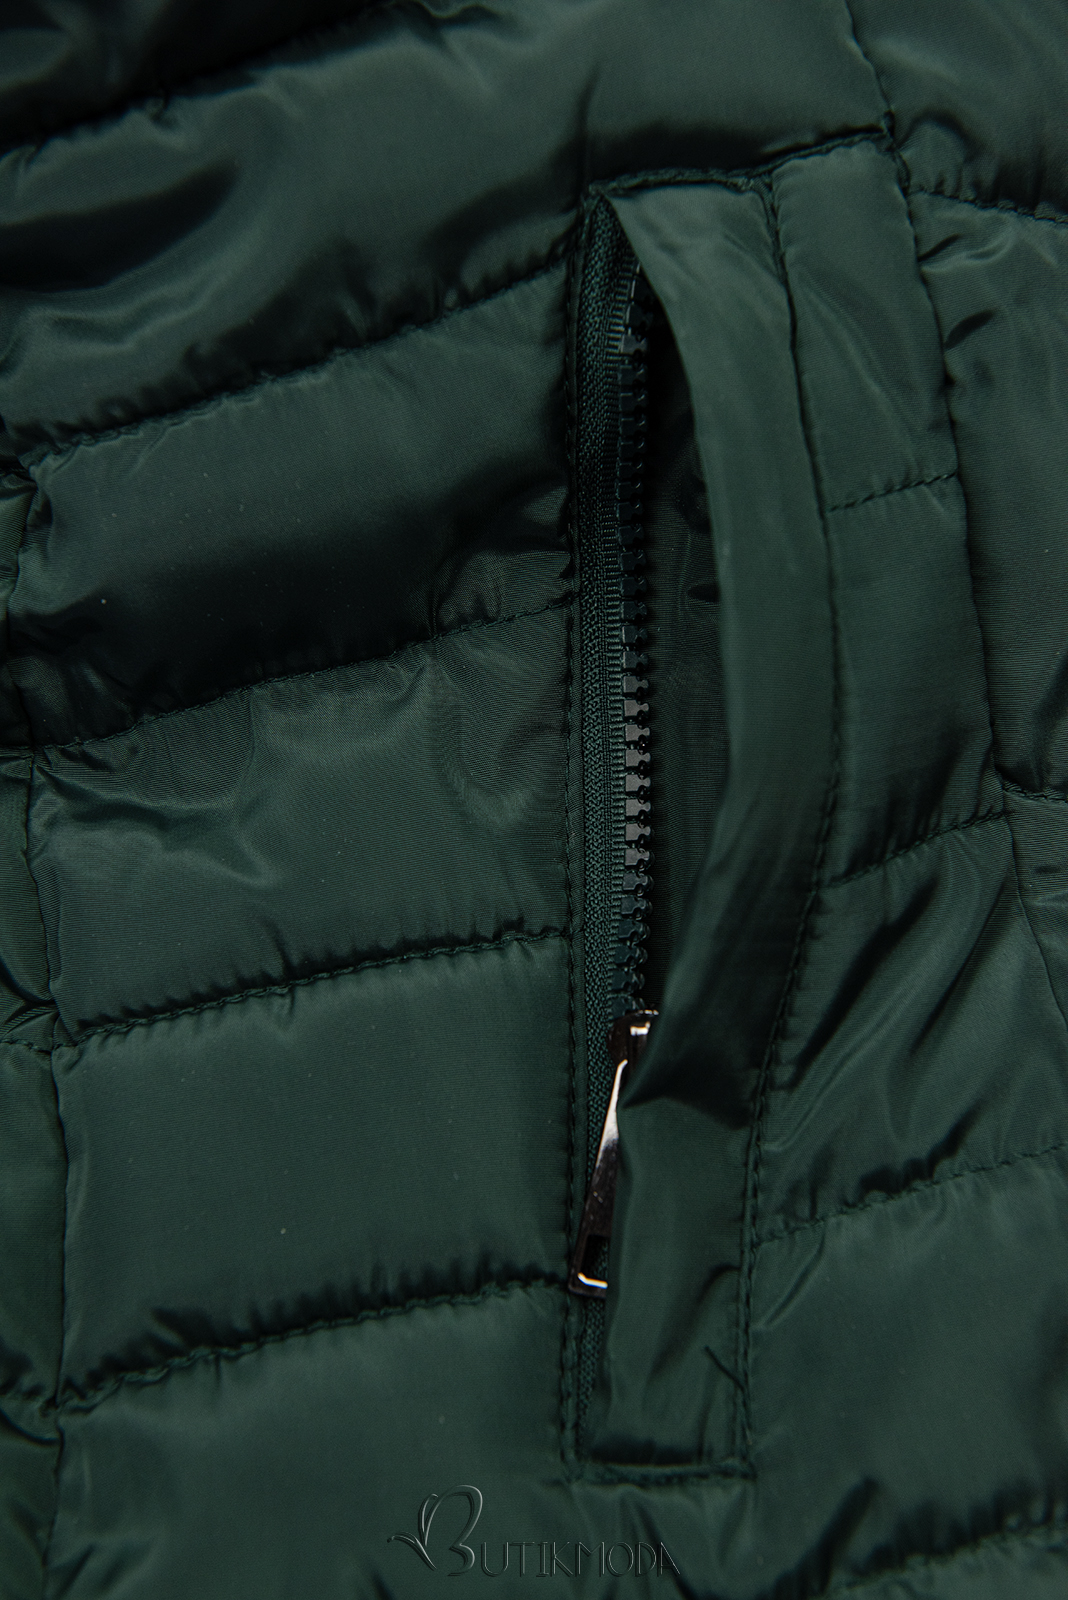 Dark green quilted jacket for autumn/winter